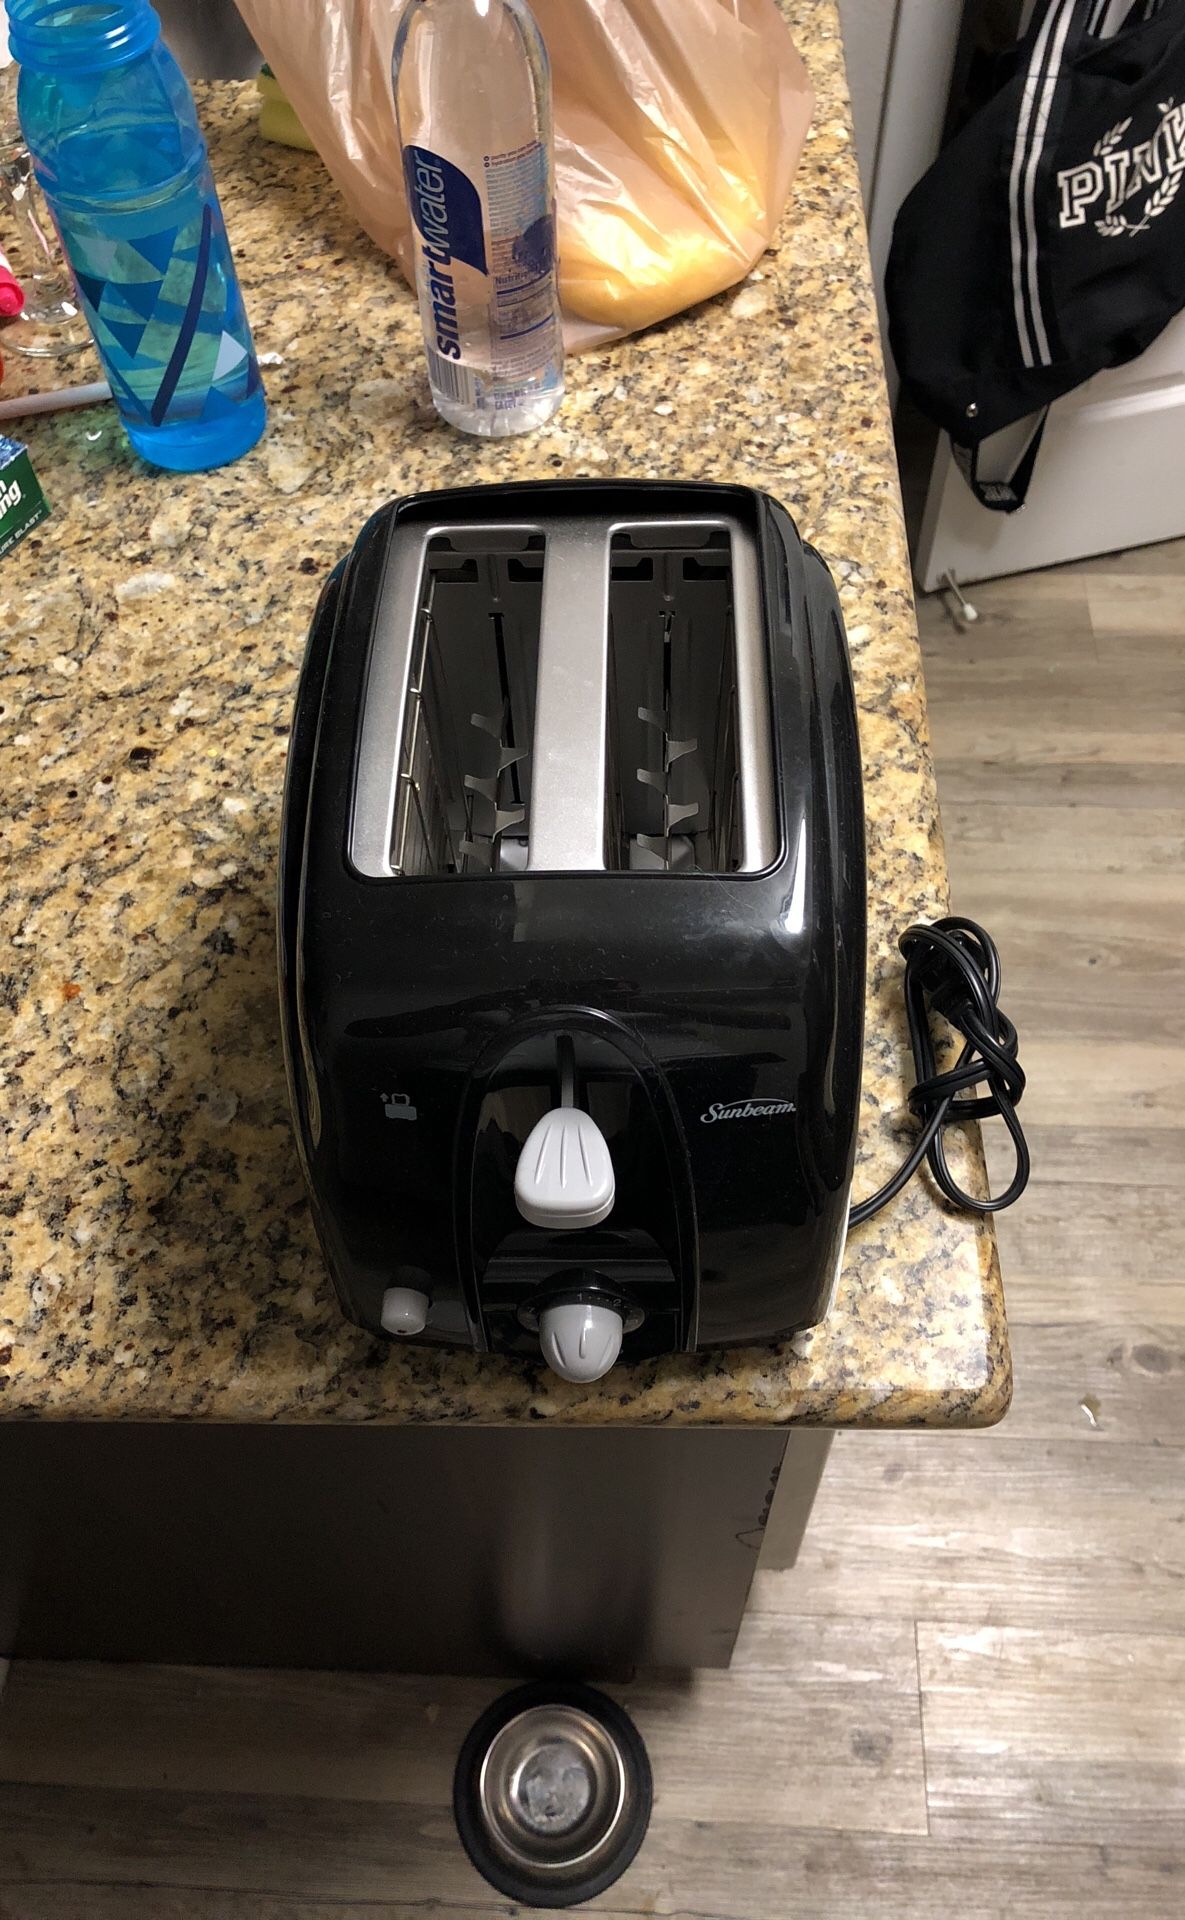 Sunbeam toaster kitchen appliances